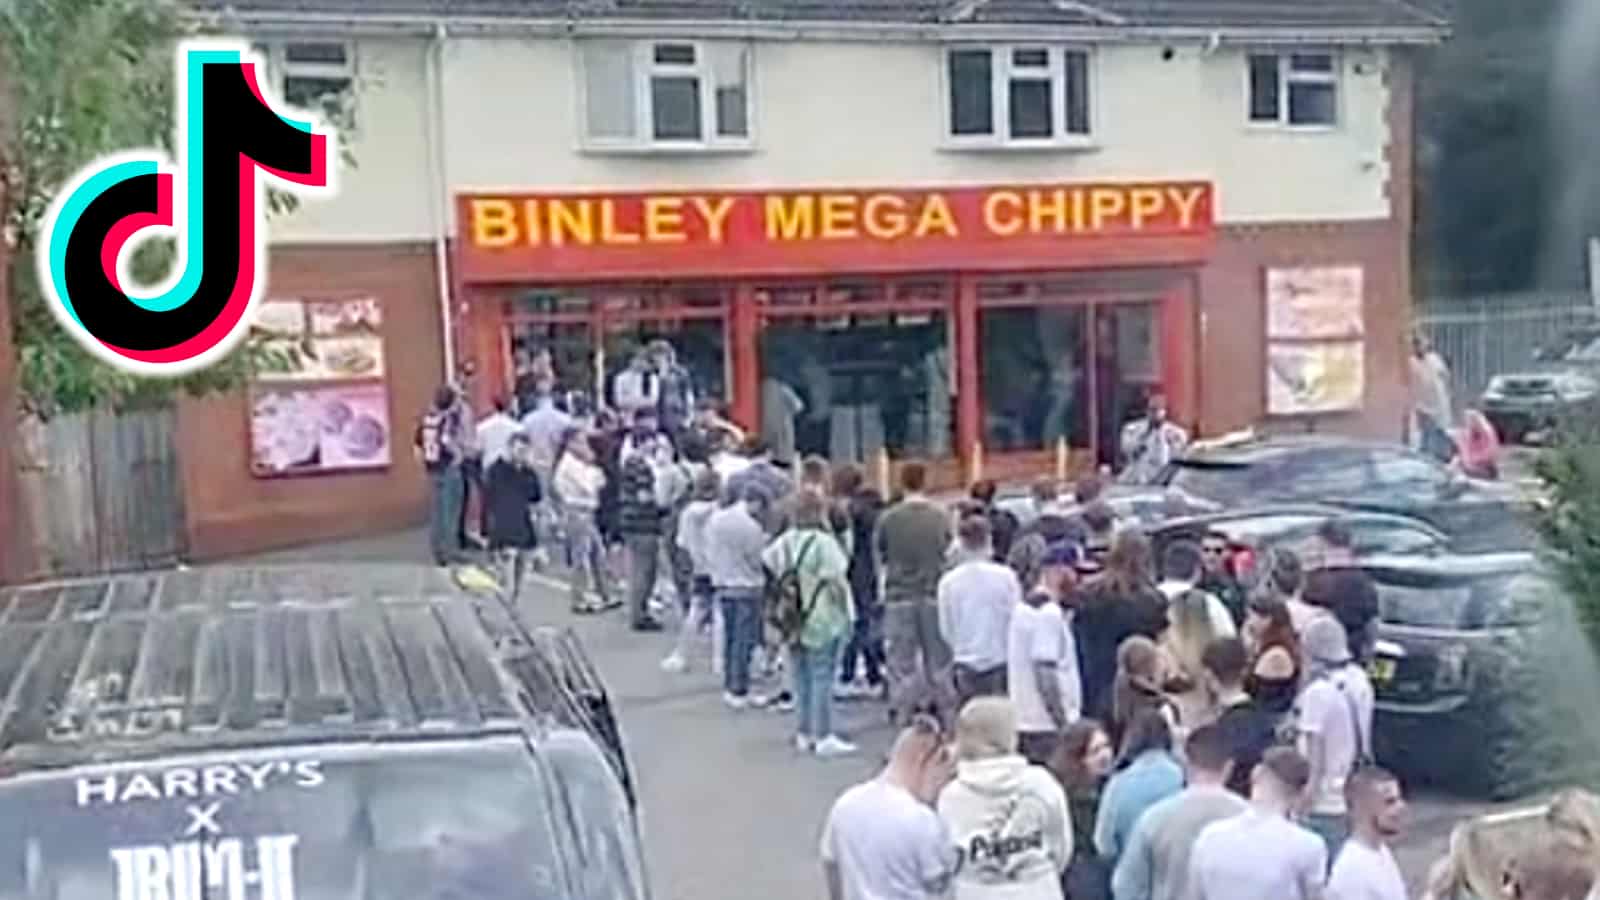 People queue for Binley Mega Chippy